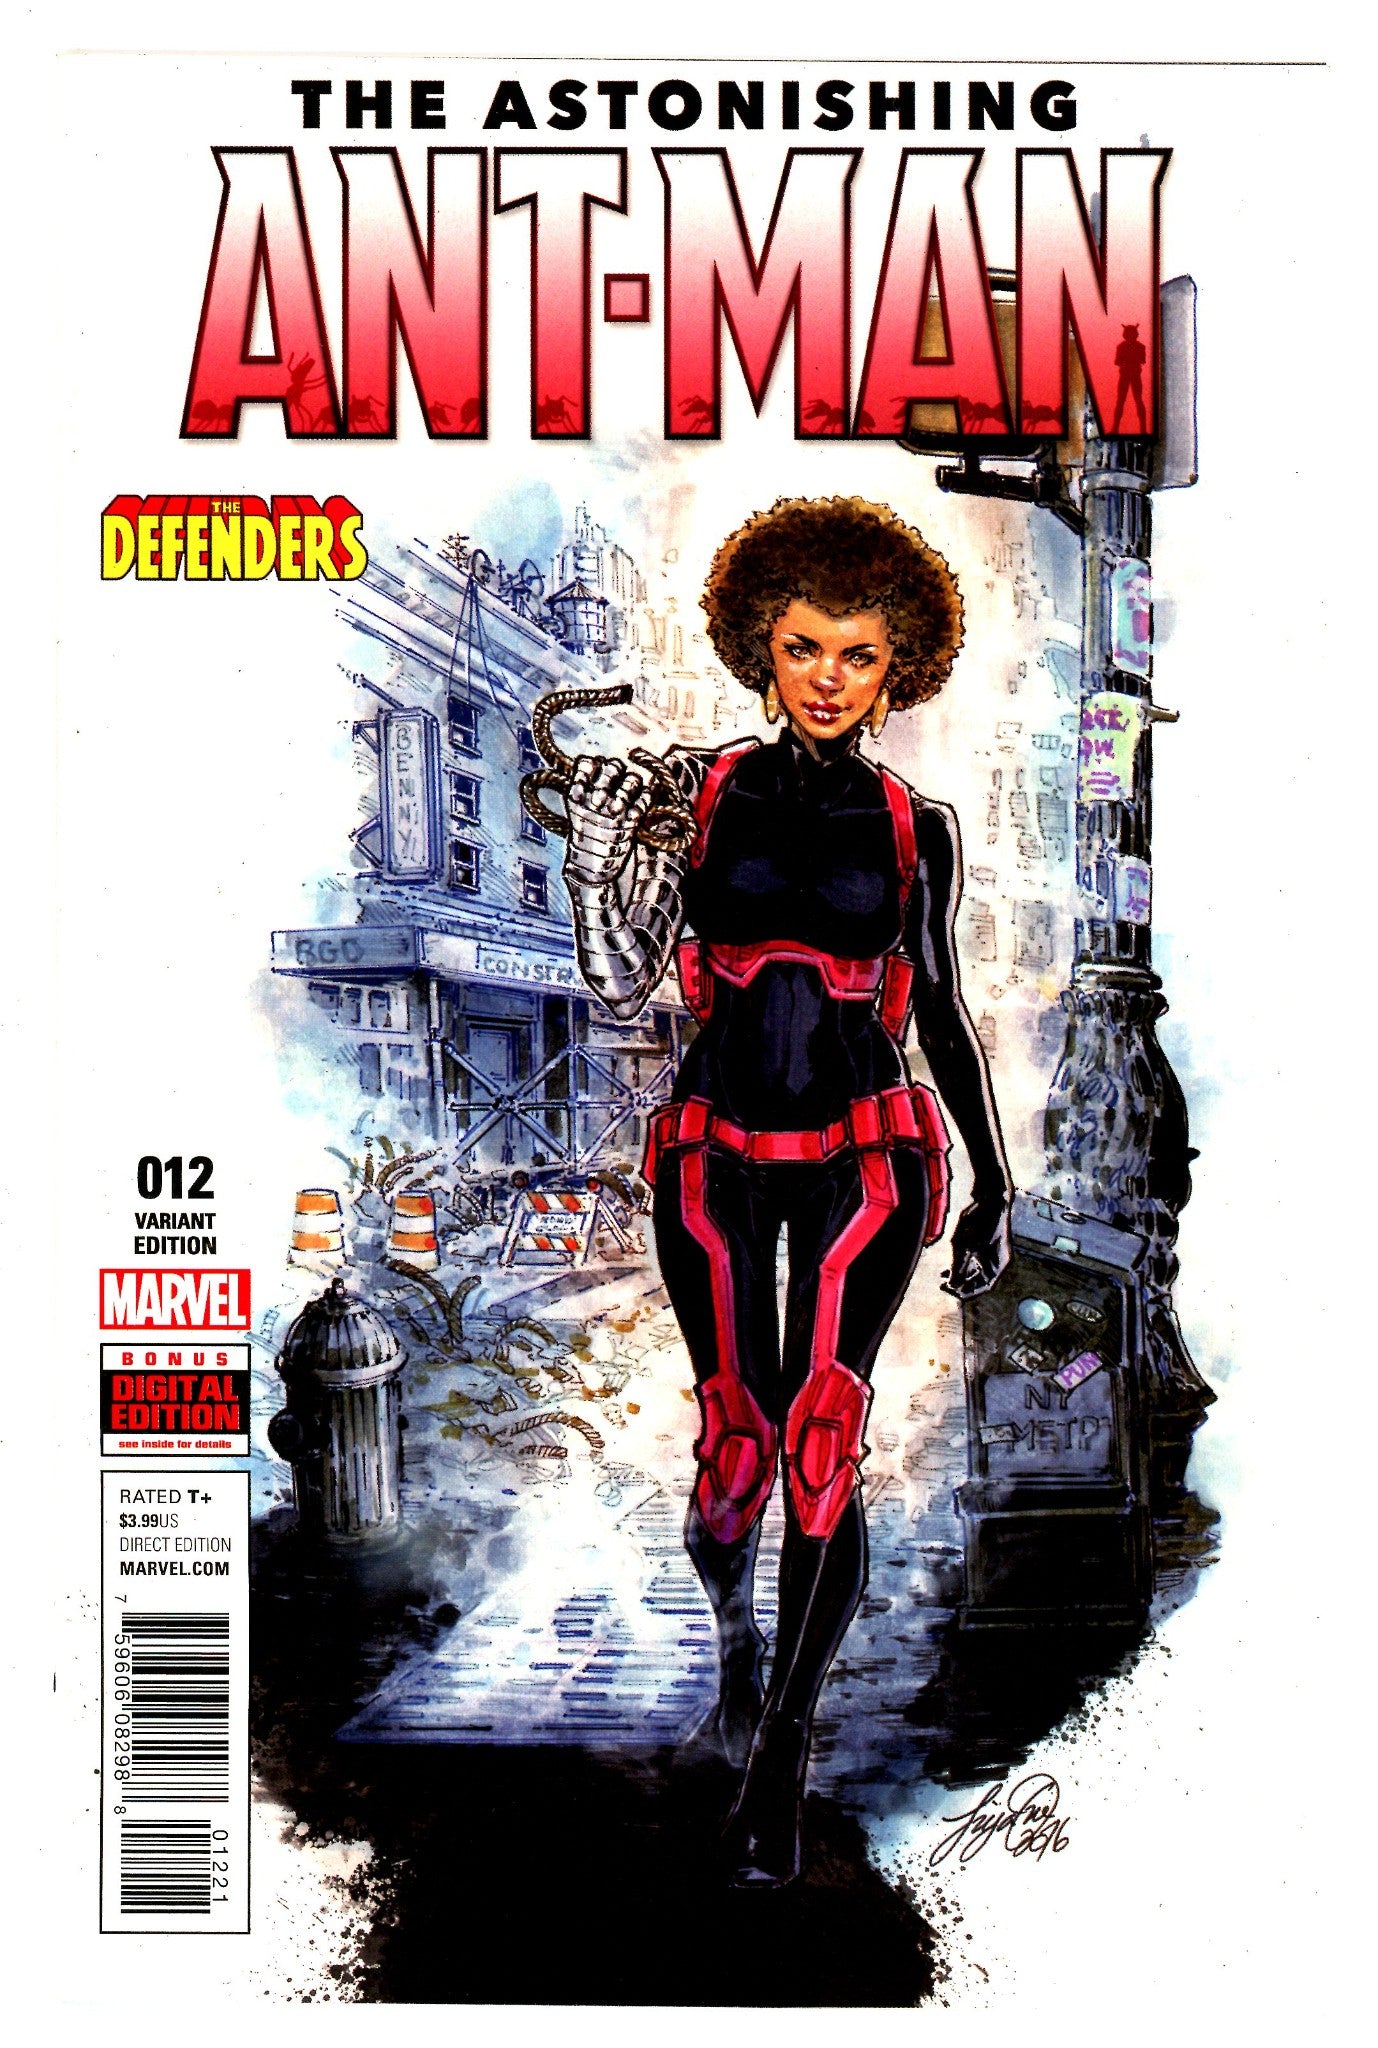 The Astonishing Ant-Man Vol 1 12 Oum Variant NM-